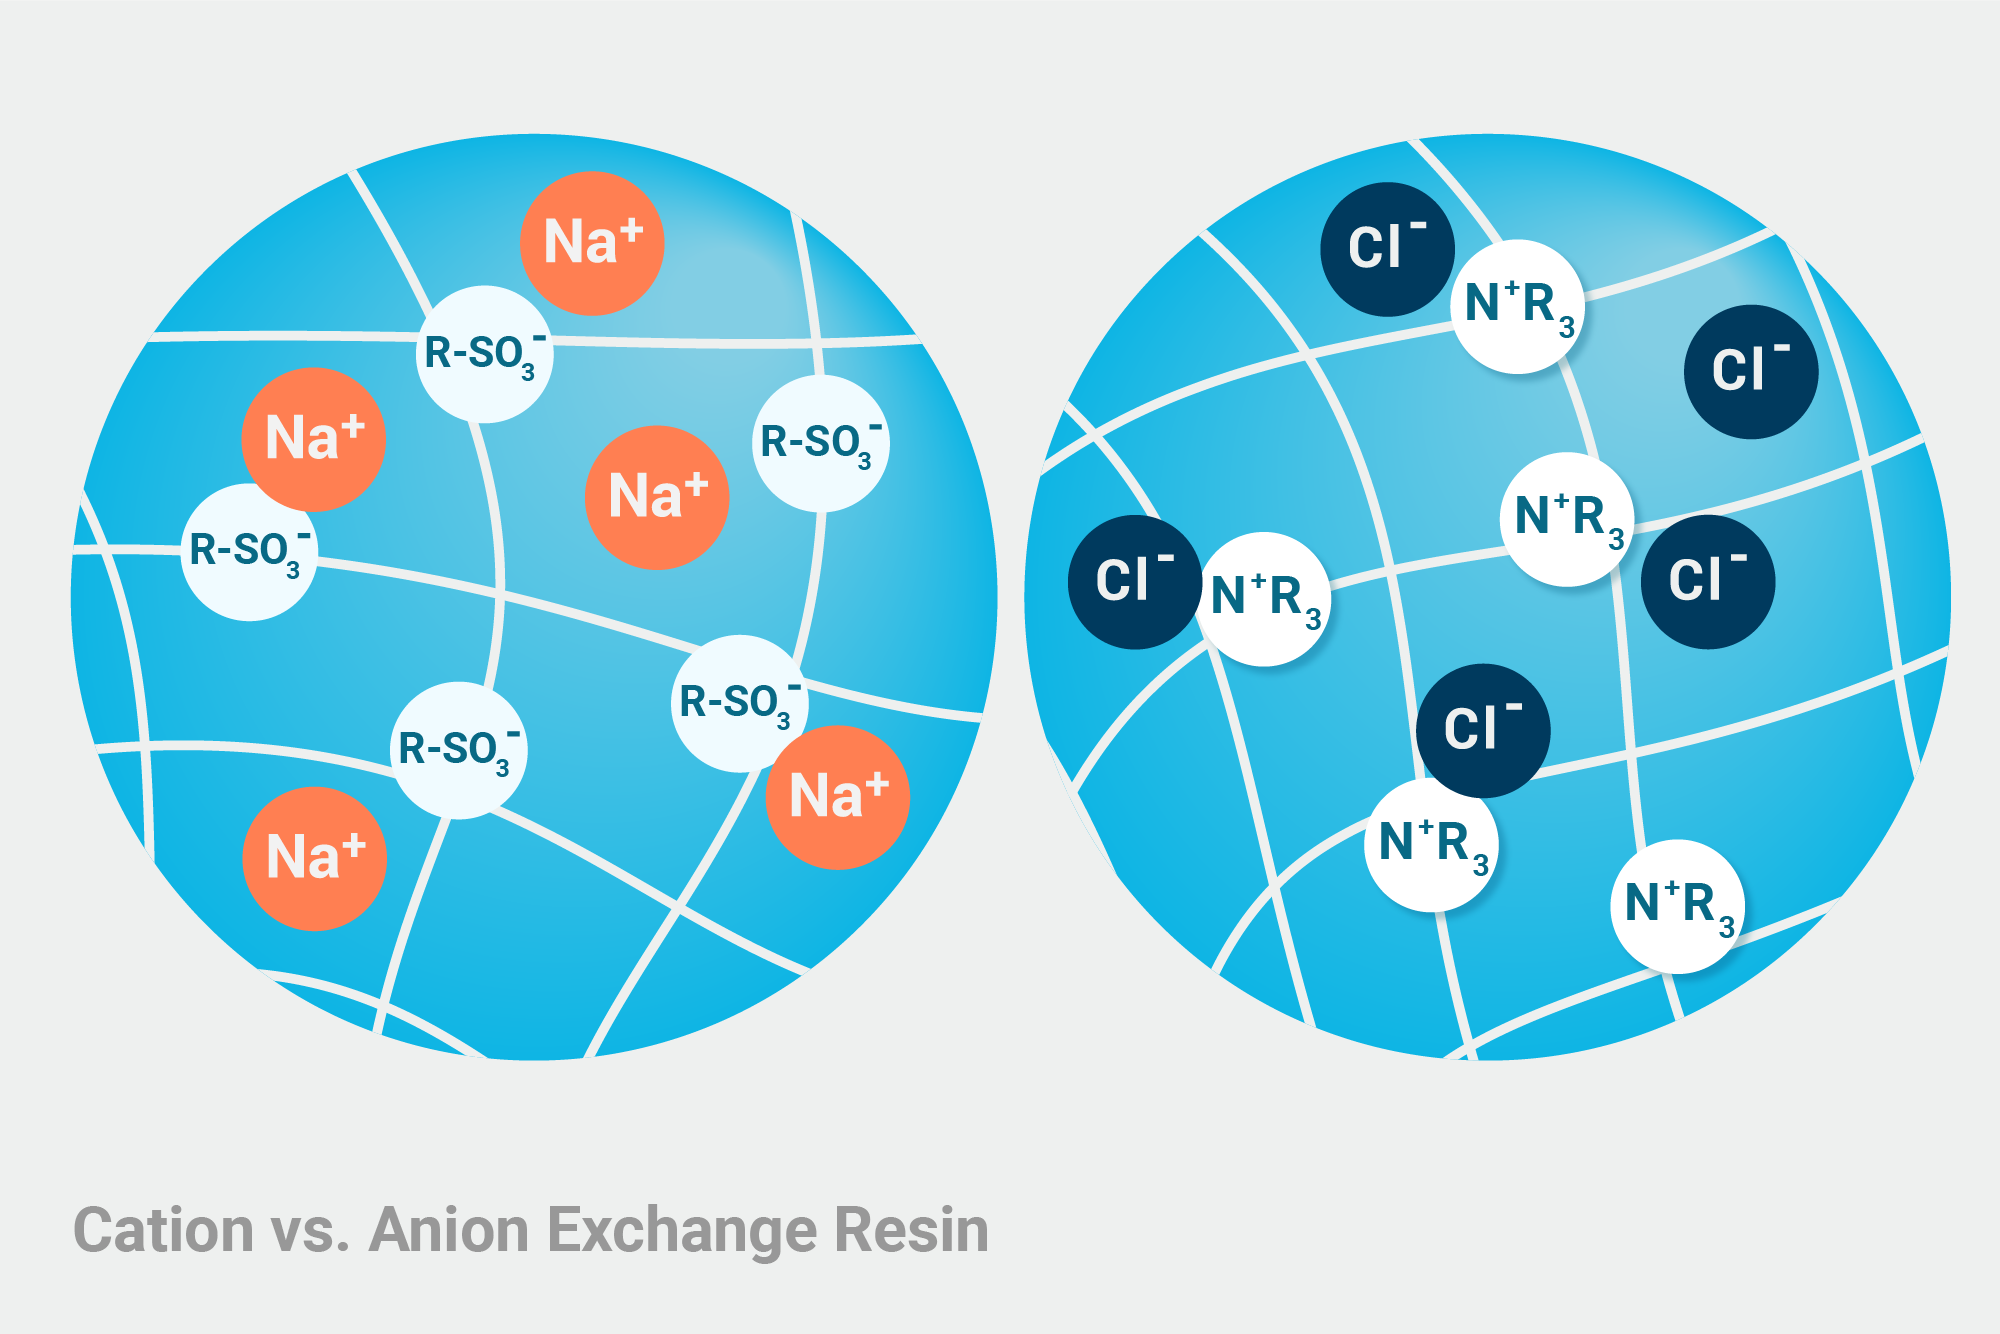 Cation versus Anion Exchange